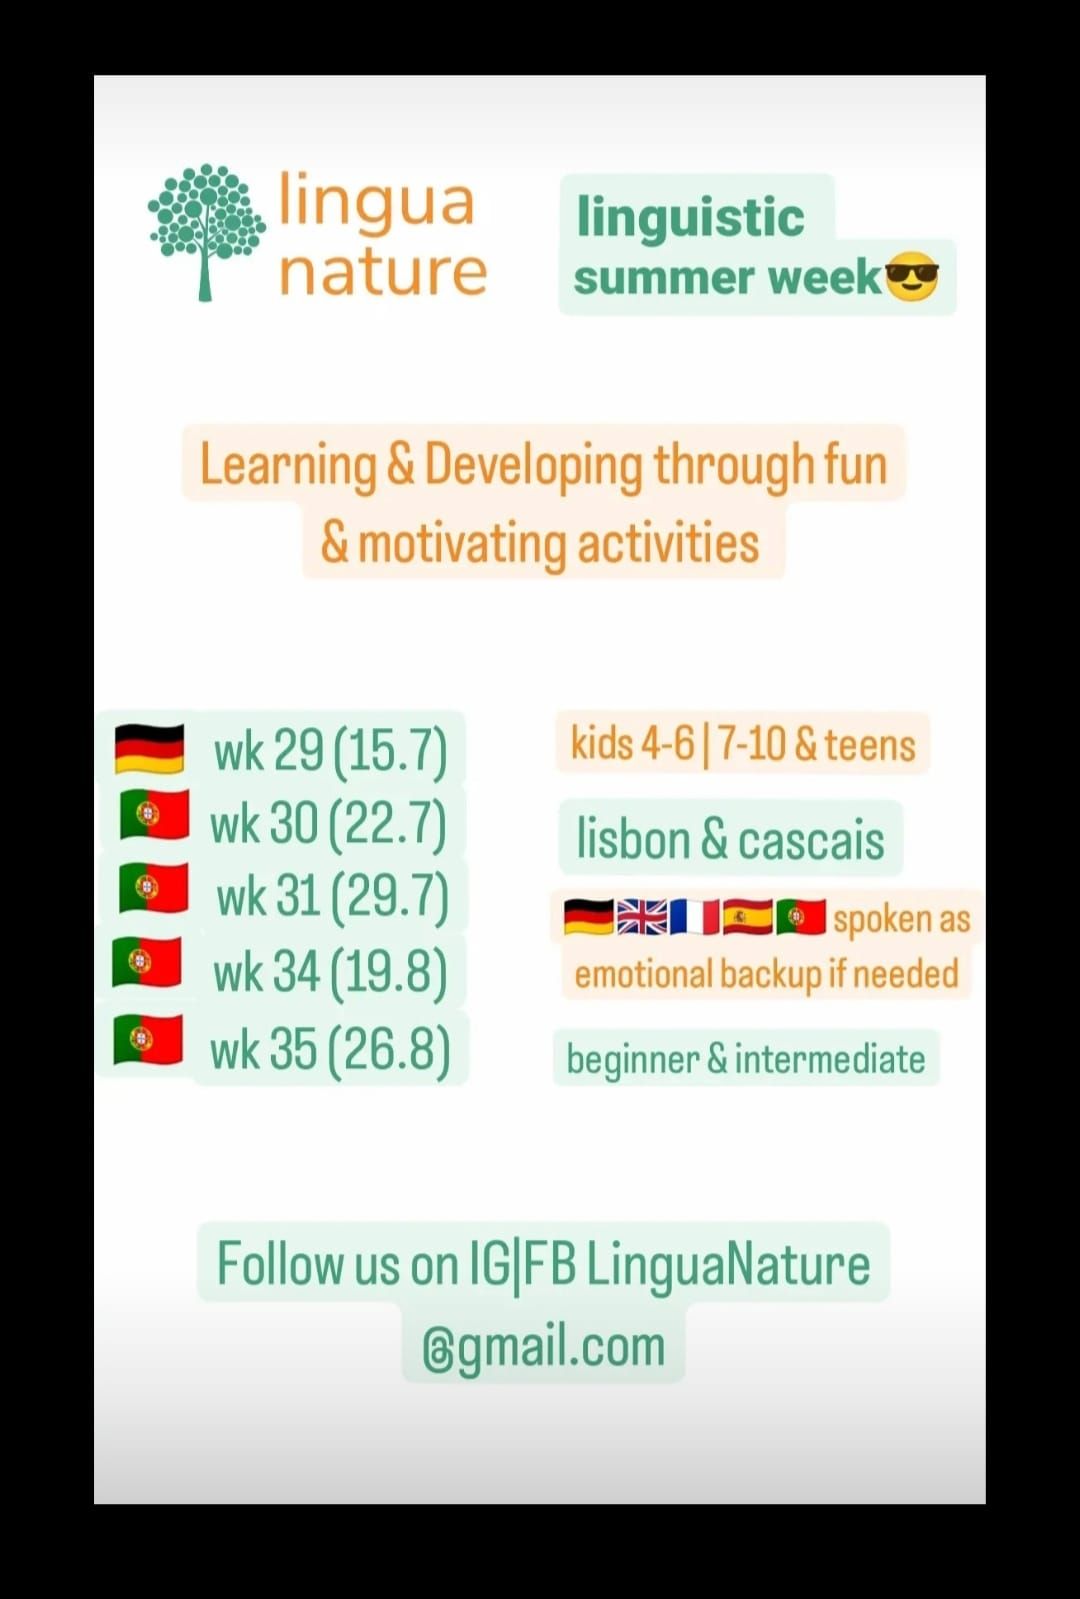 Linguistic summer week, Portuguese language 